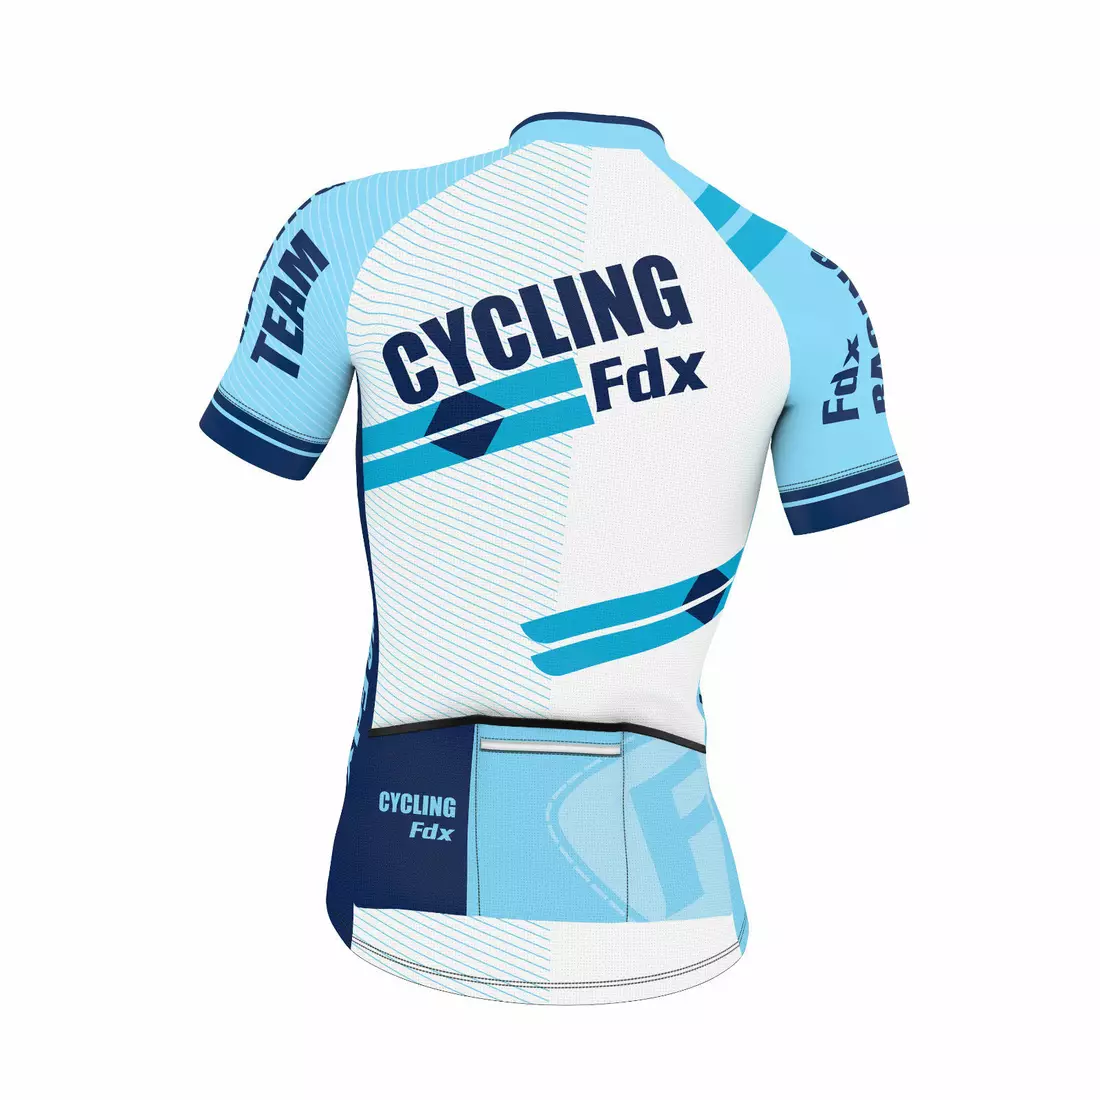 FDX 1050 men's cycling jersey, black-blue